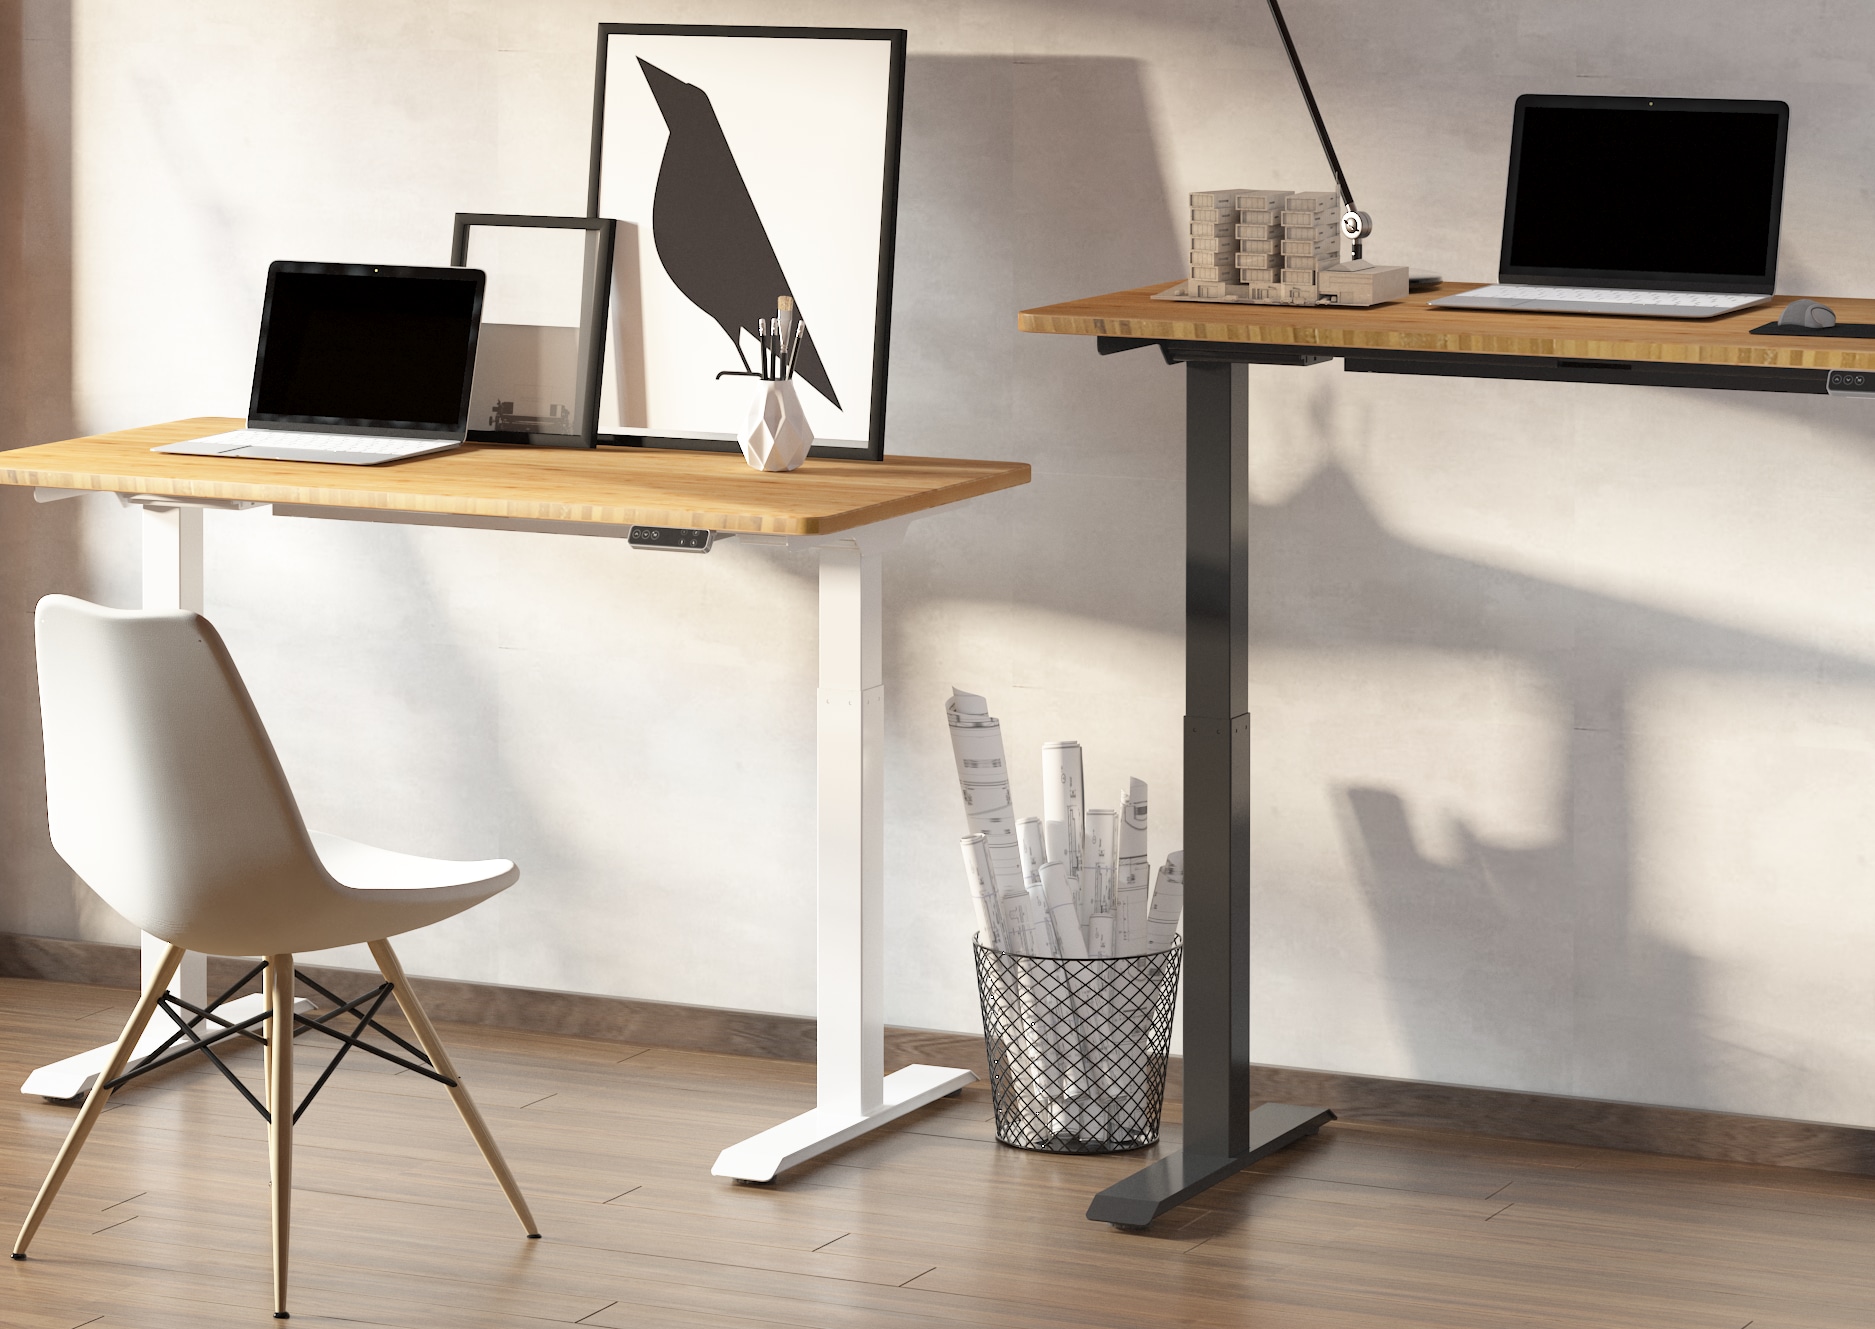 FlexiSpot E7 vs. Ikea Bekant …which is the better standing desk?